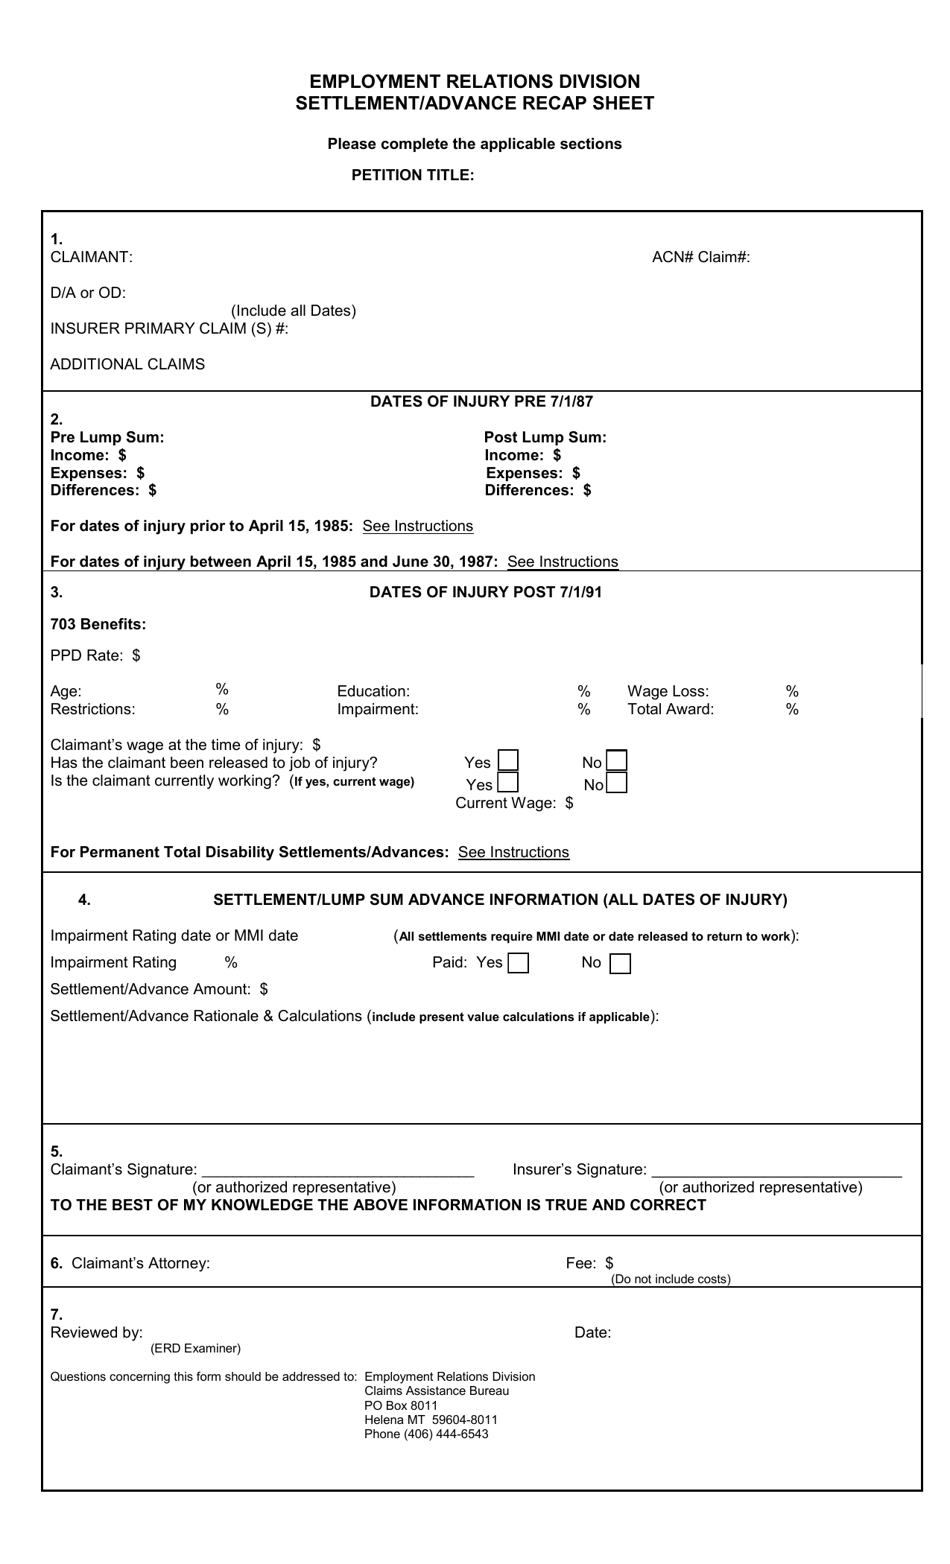 Settlement / Advance Recap Sheet - Montana, Page 1